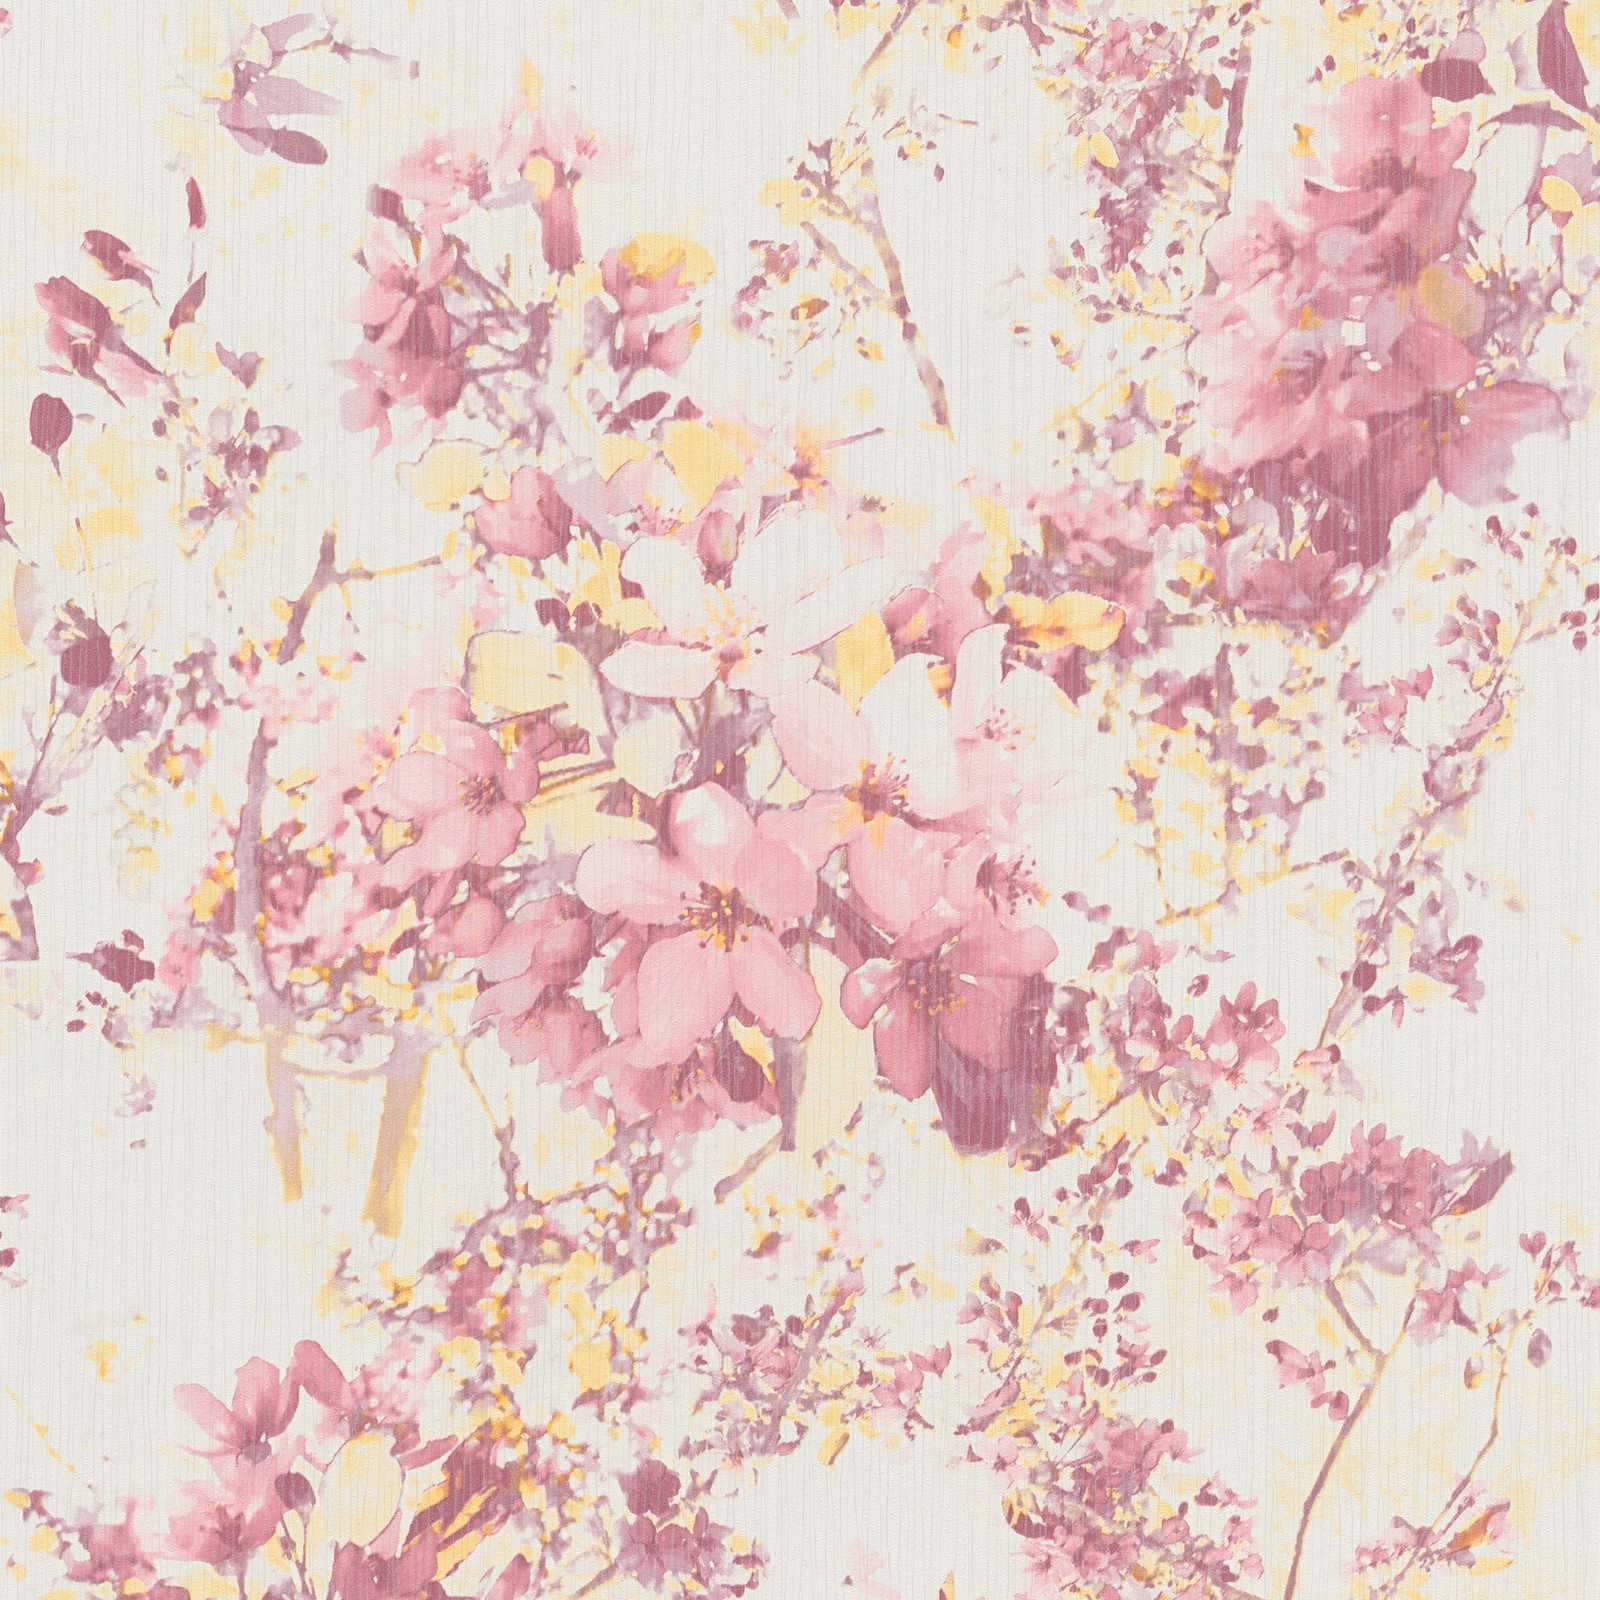 Carta da parati in tessuto non tessuto Flowers con motivo floreale - rosa, giallo
